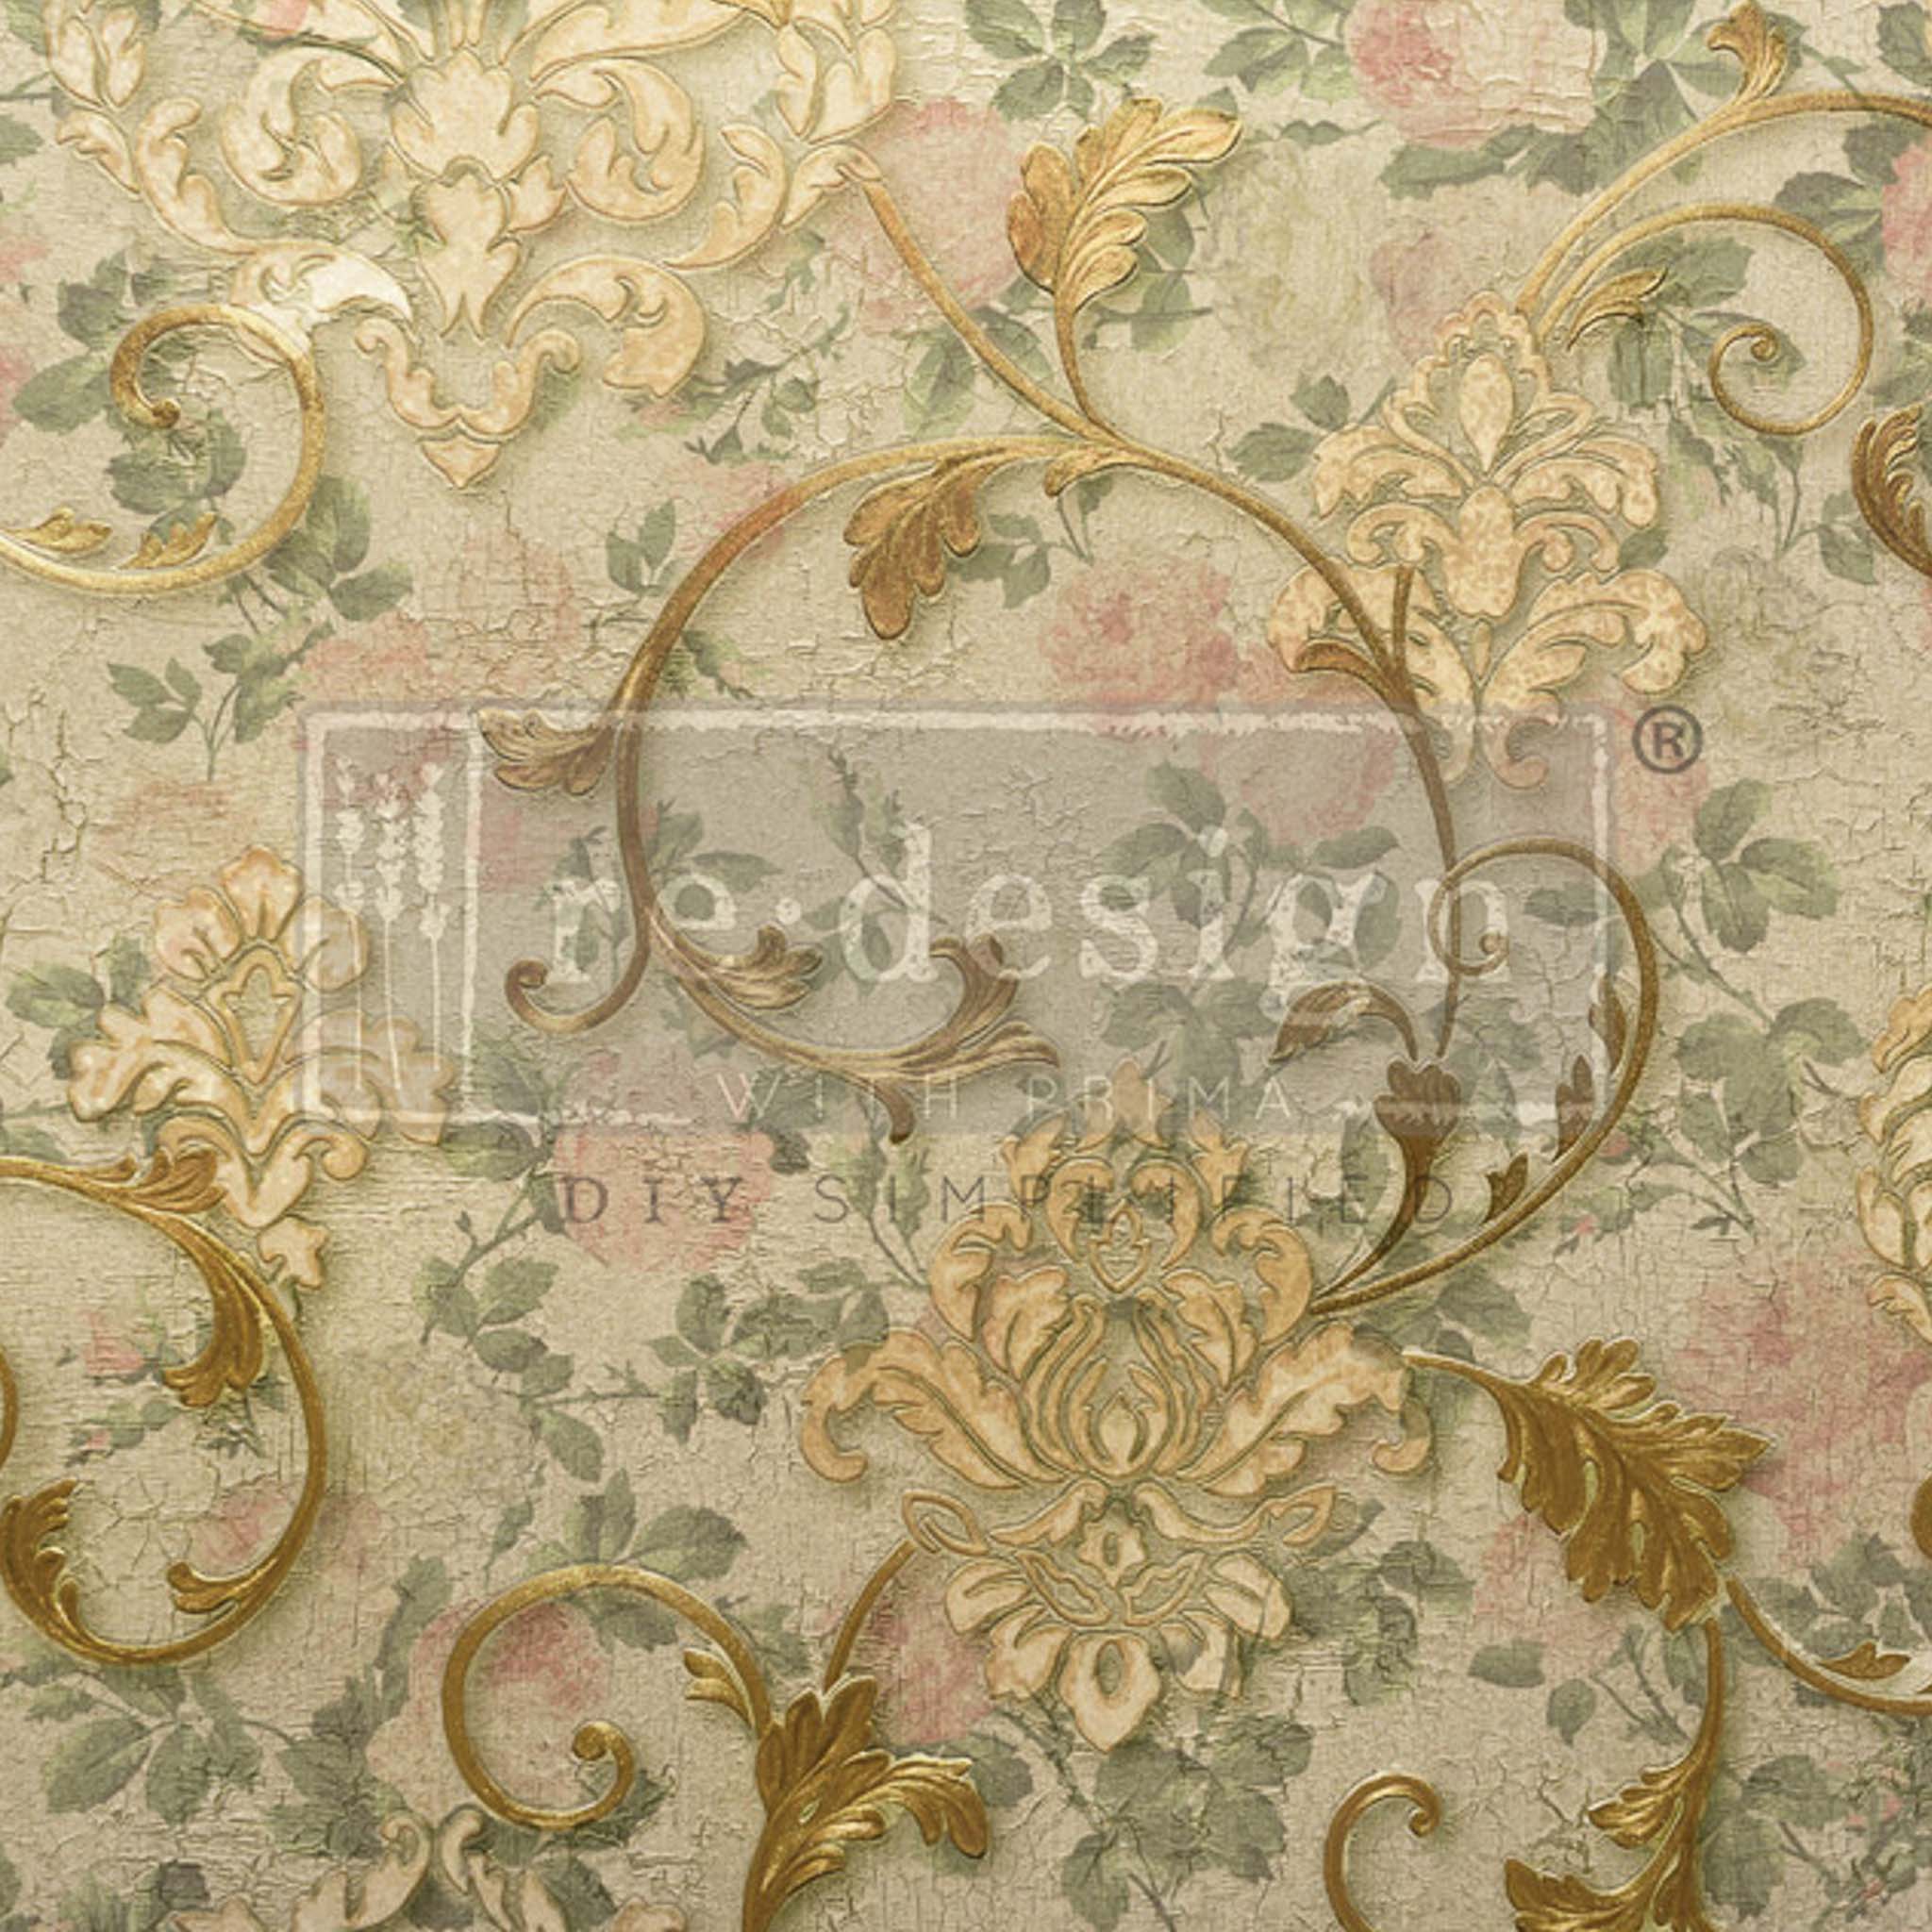 Close-up of a tissue paper design of gold brocade against a crackled light pink floral and beige background.